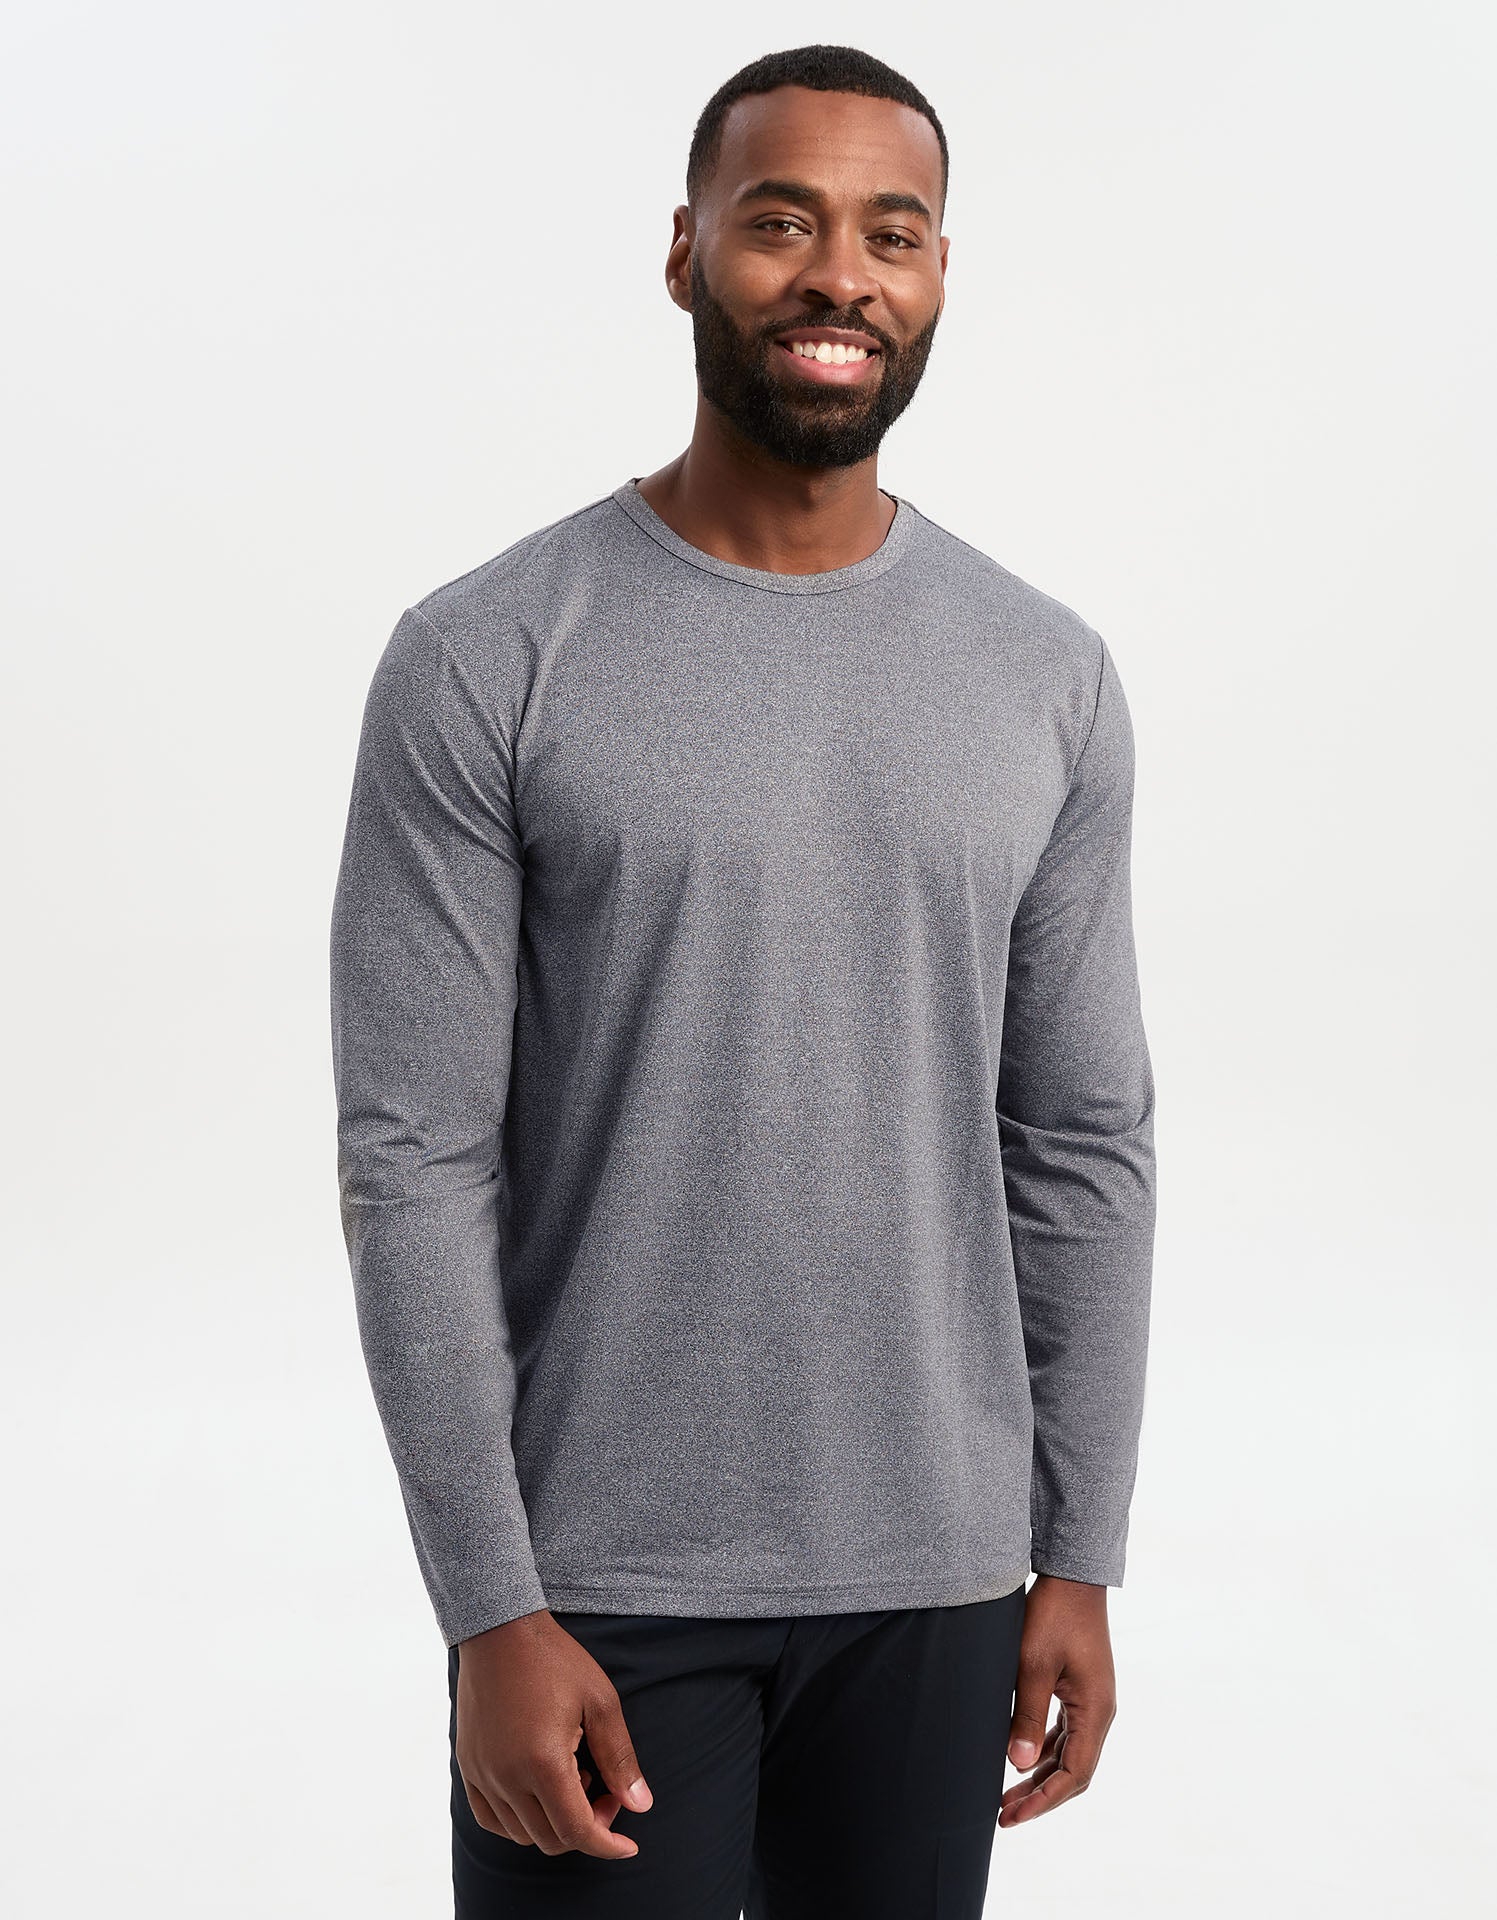 Sun Protective Long Sleeve T-Shirt Upf50+ For Men | UV Protection Dark Grey